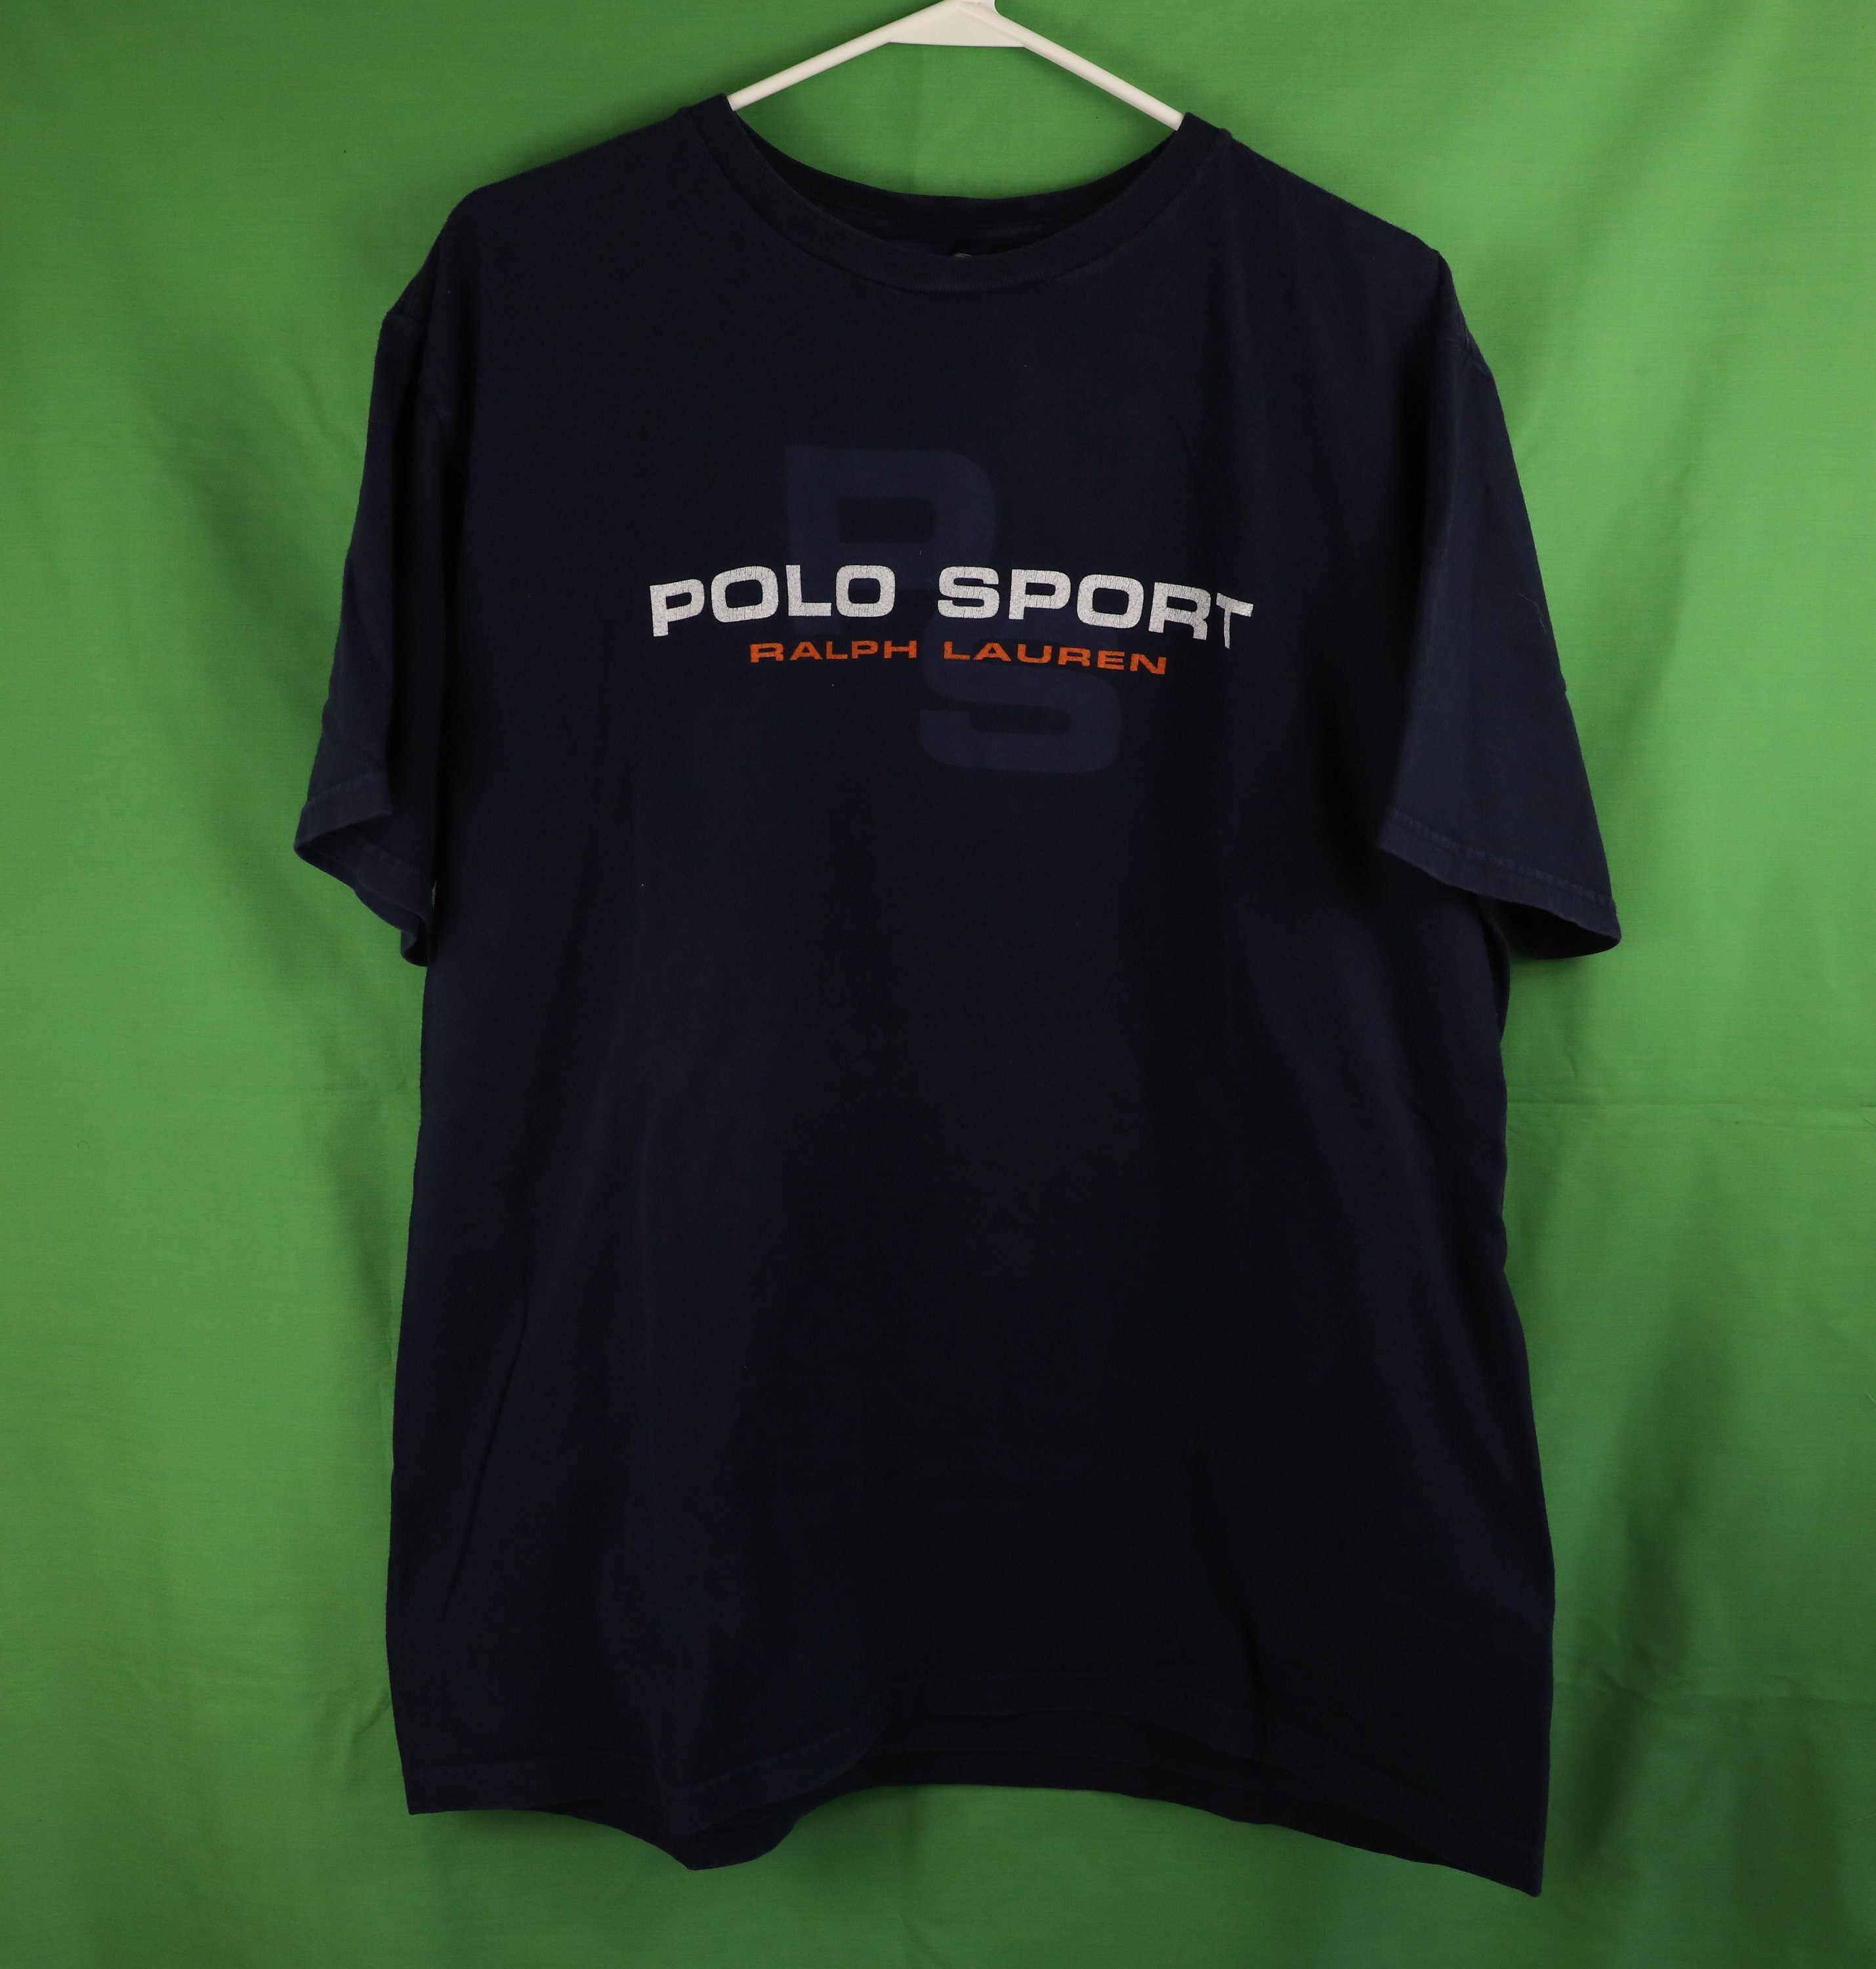 90s Polo Sport - Etsy